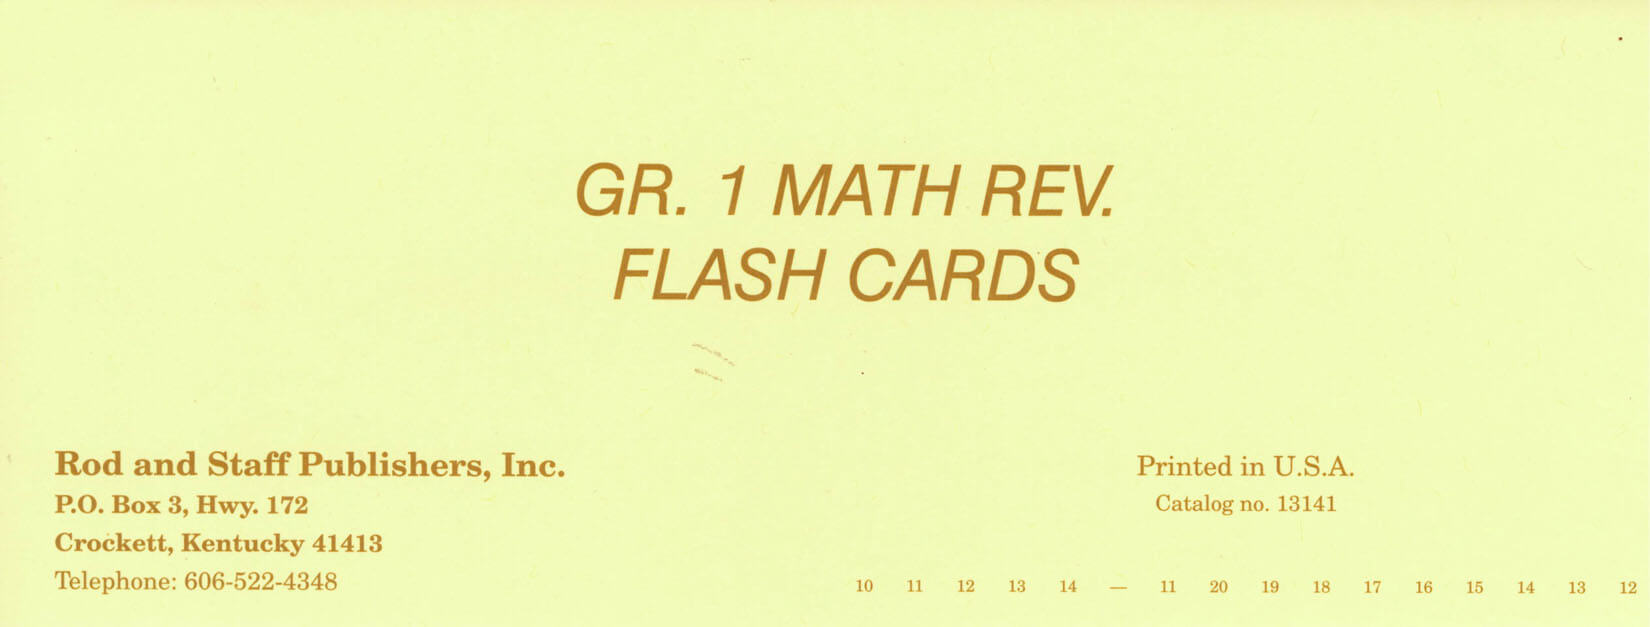 rod-staff-grade-1-math-flashcards-classical-education-books